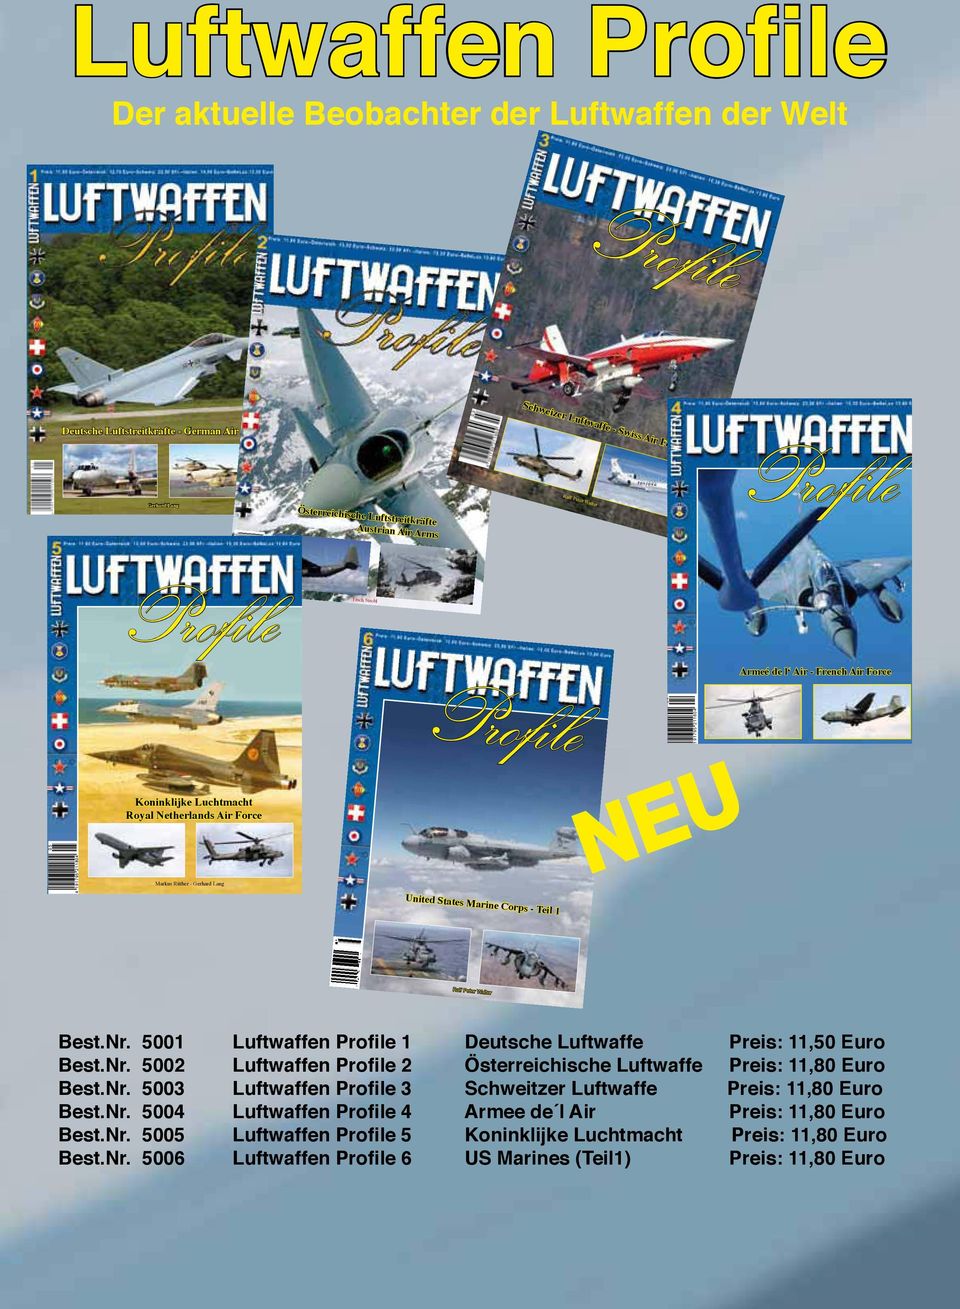 Arado Ar 232 „Tatzelwurm“ und Arado Ar 432 Luftfahrt History Heft 12